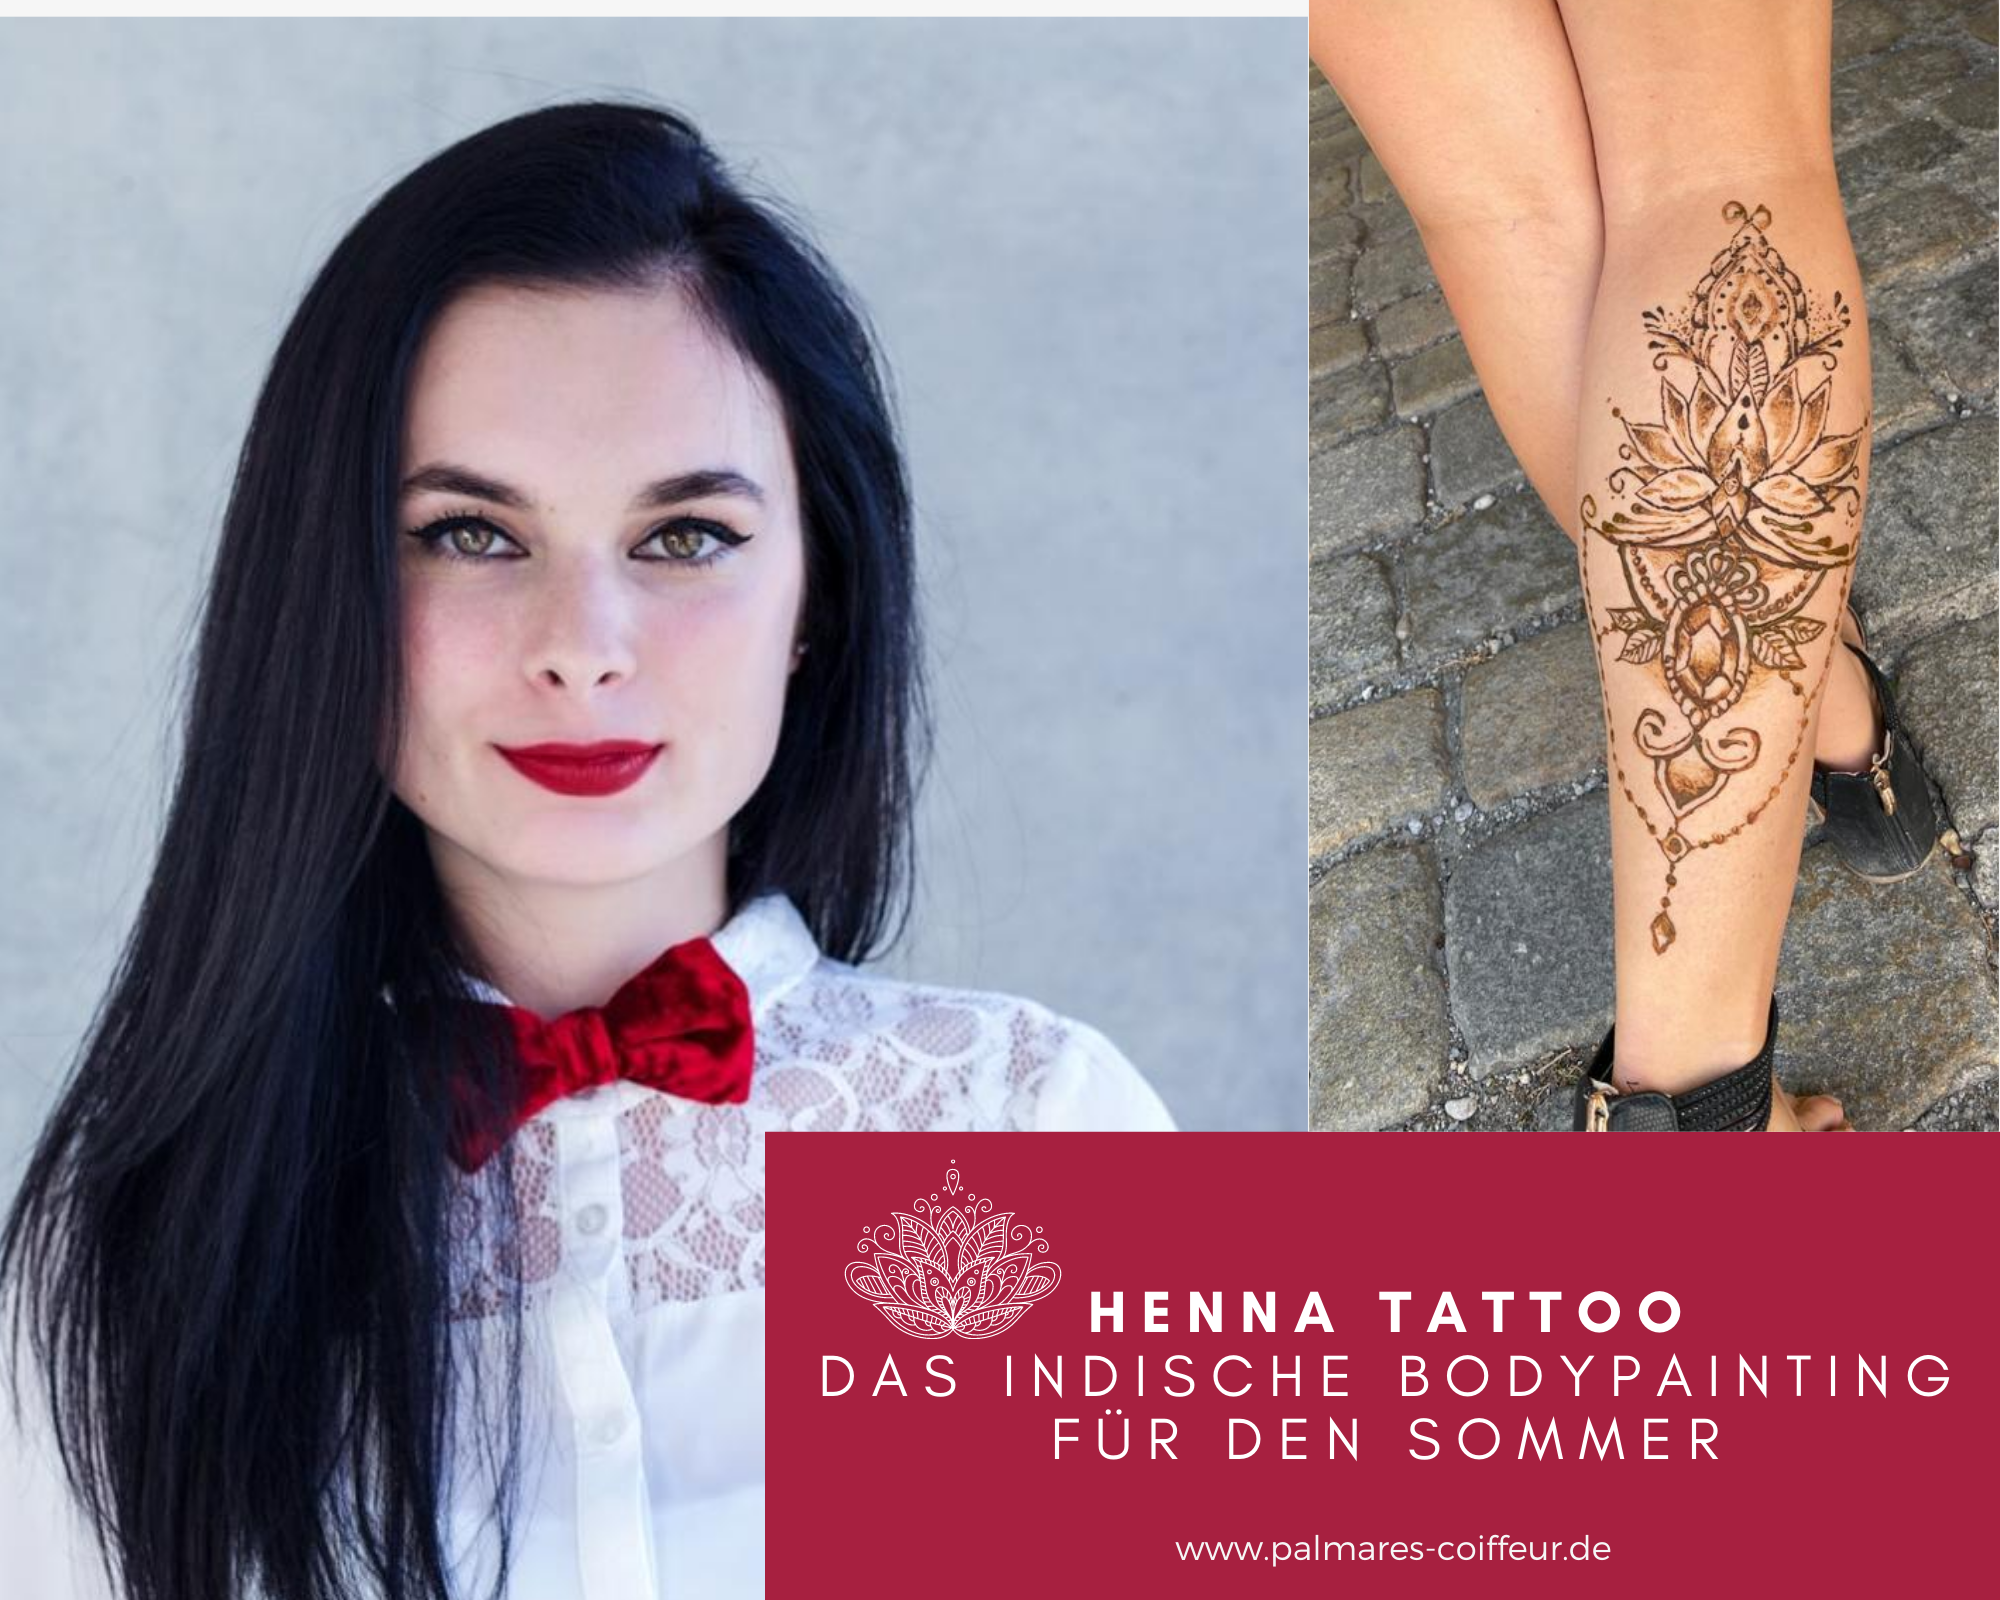 Henna Tattoo_Irina_Coiffeur Palmarés_Claudia Palm_Landsberg am Lech